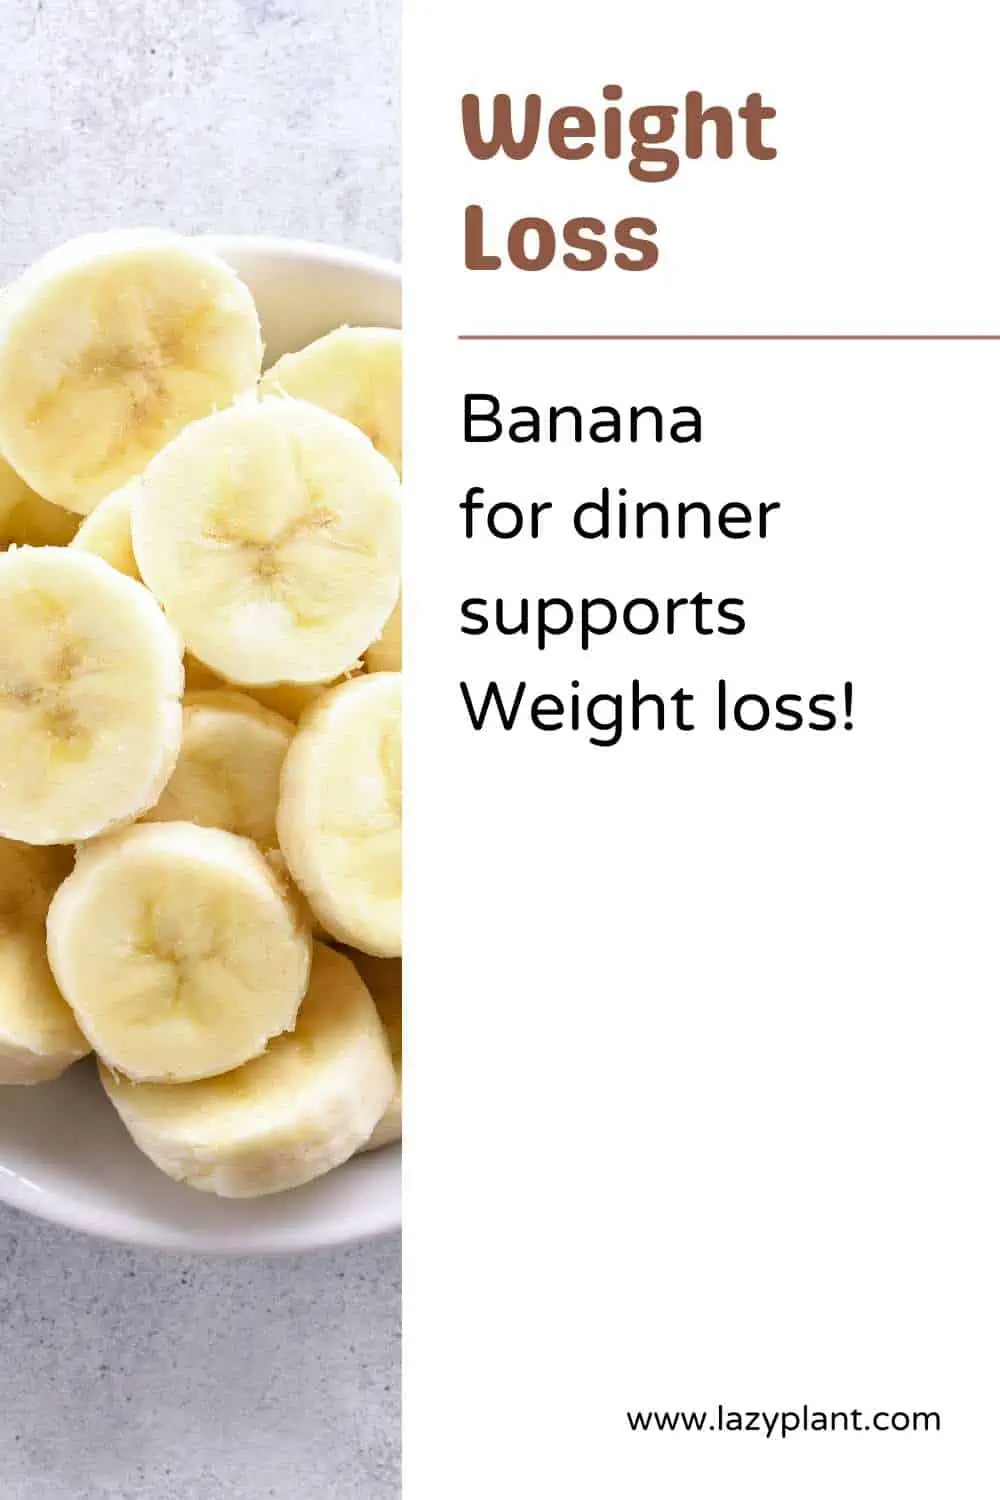 Does eating a banana at night support weight loss?